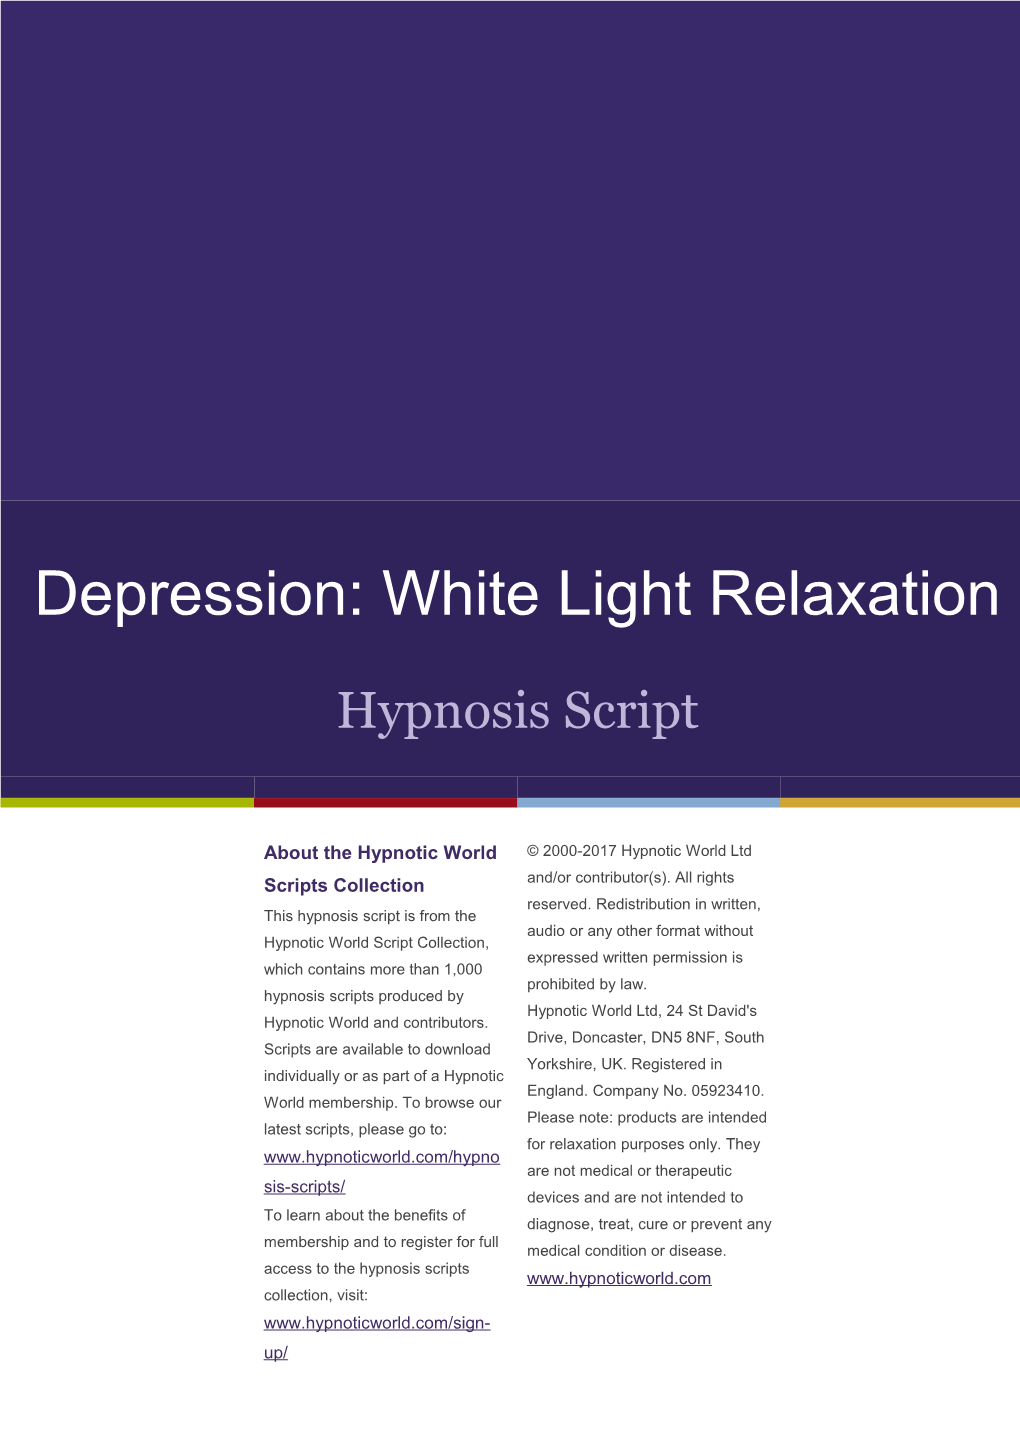 Depression: White Light Relaxation Hypnosis Script